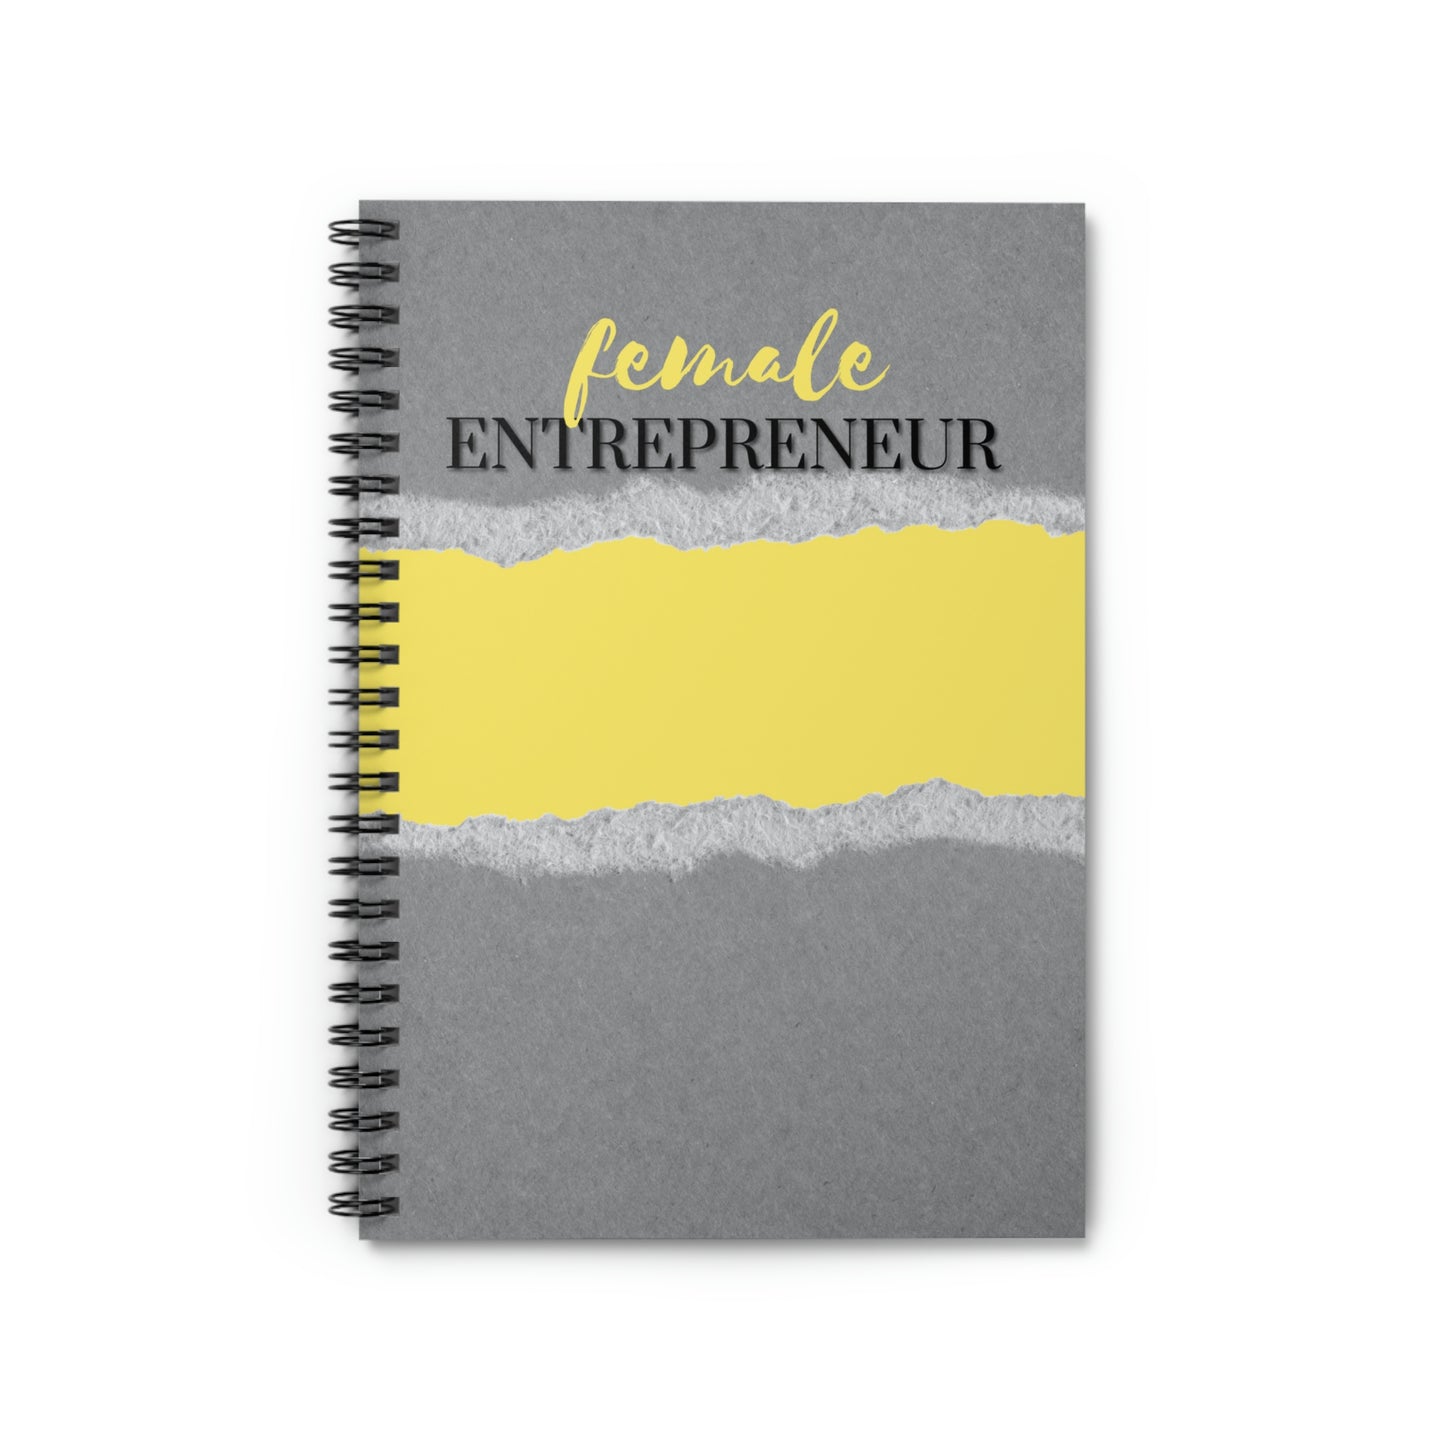 Female Entrepreneur Spiral Notebook - Ruled Line